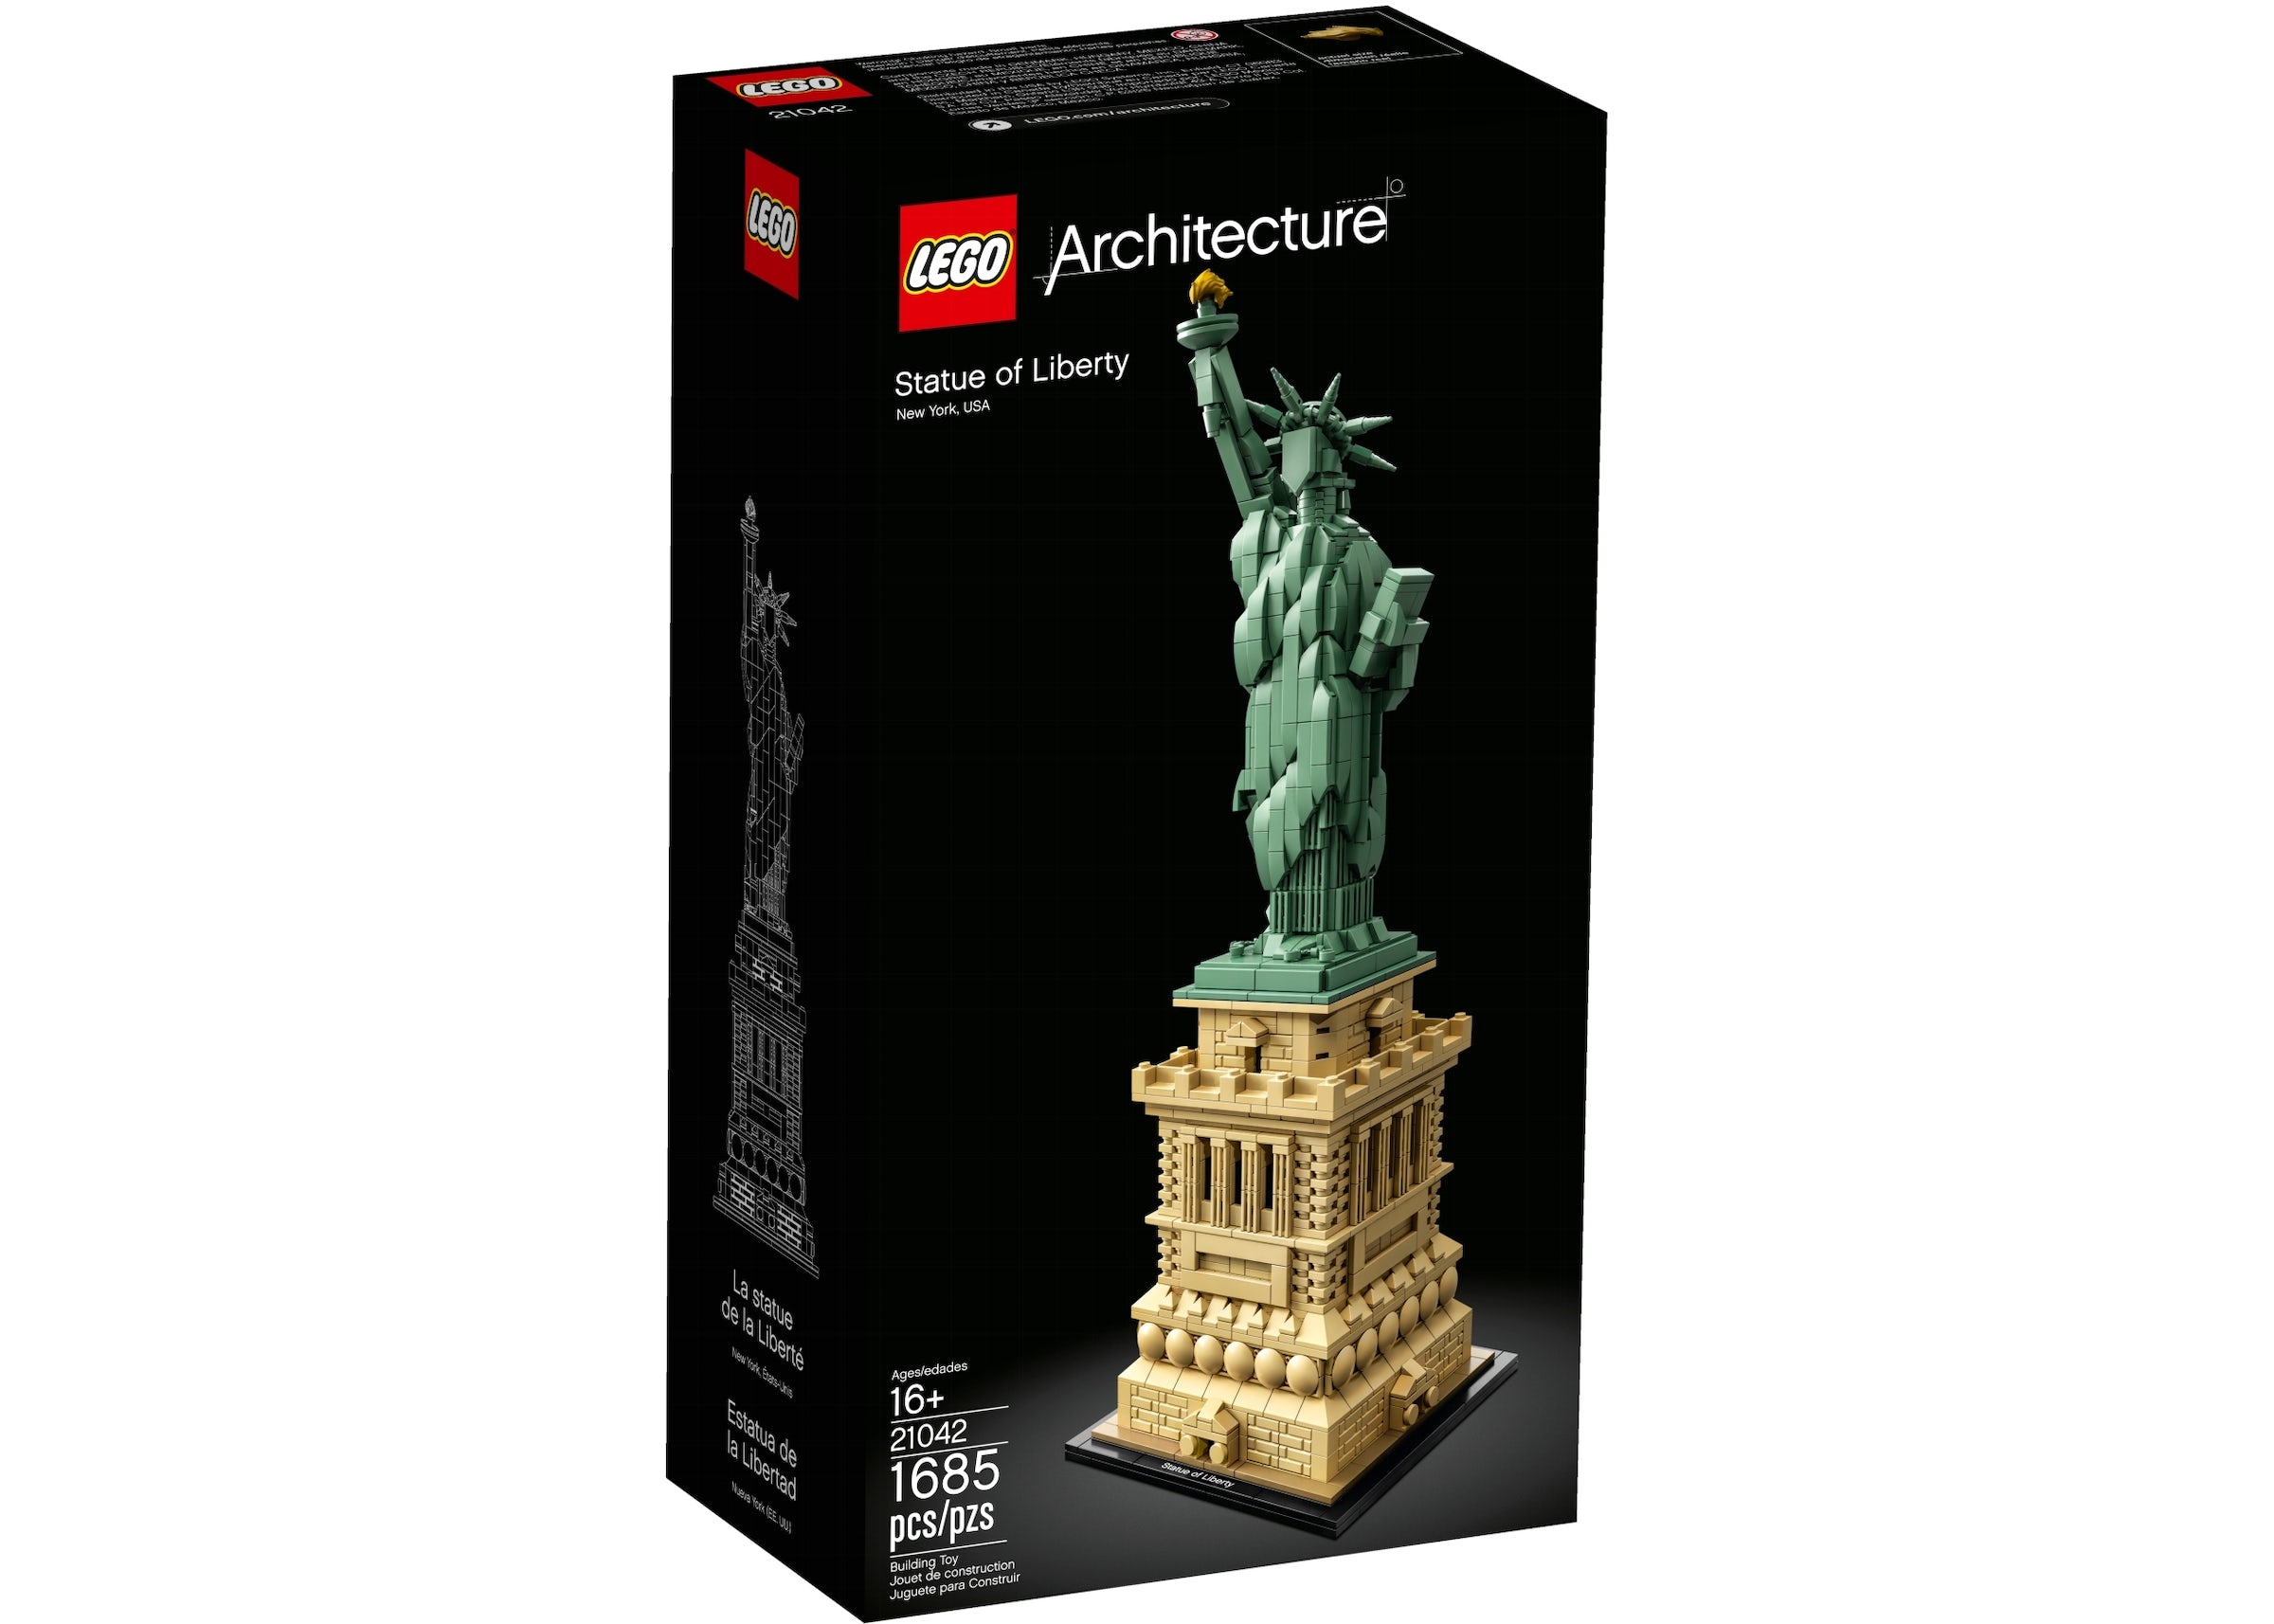 LEGO Architecture Statue of Liberty Set 21042 - US